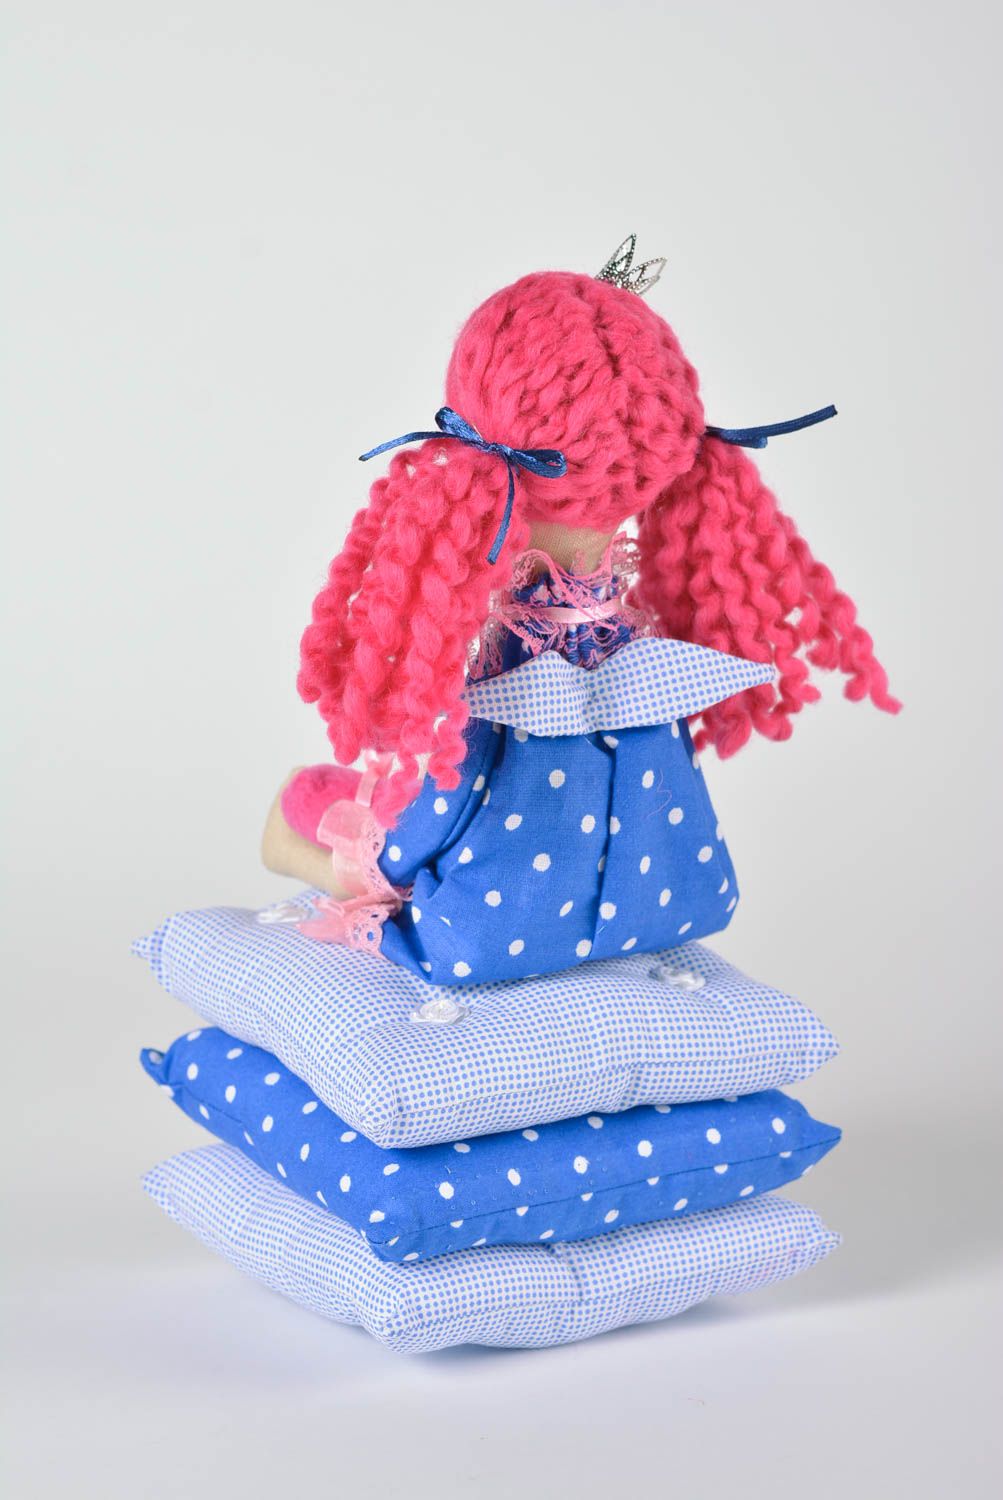 Decorative fabric doll handmade stuffed toy present for baby nursery decor photo 5